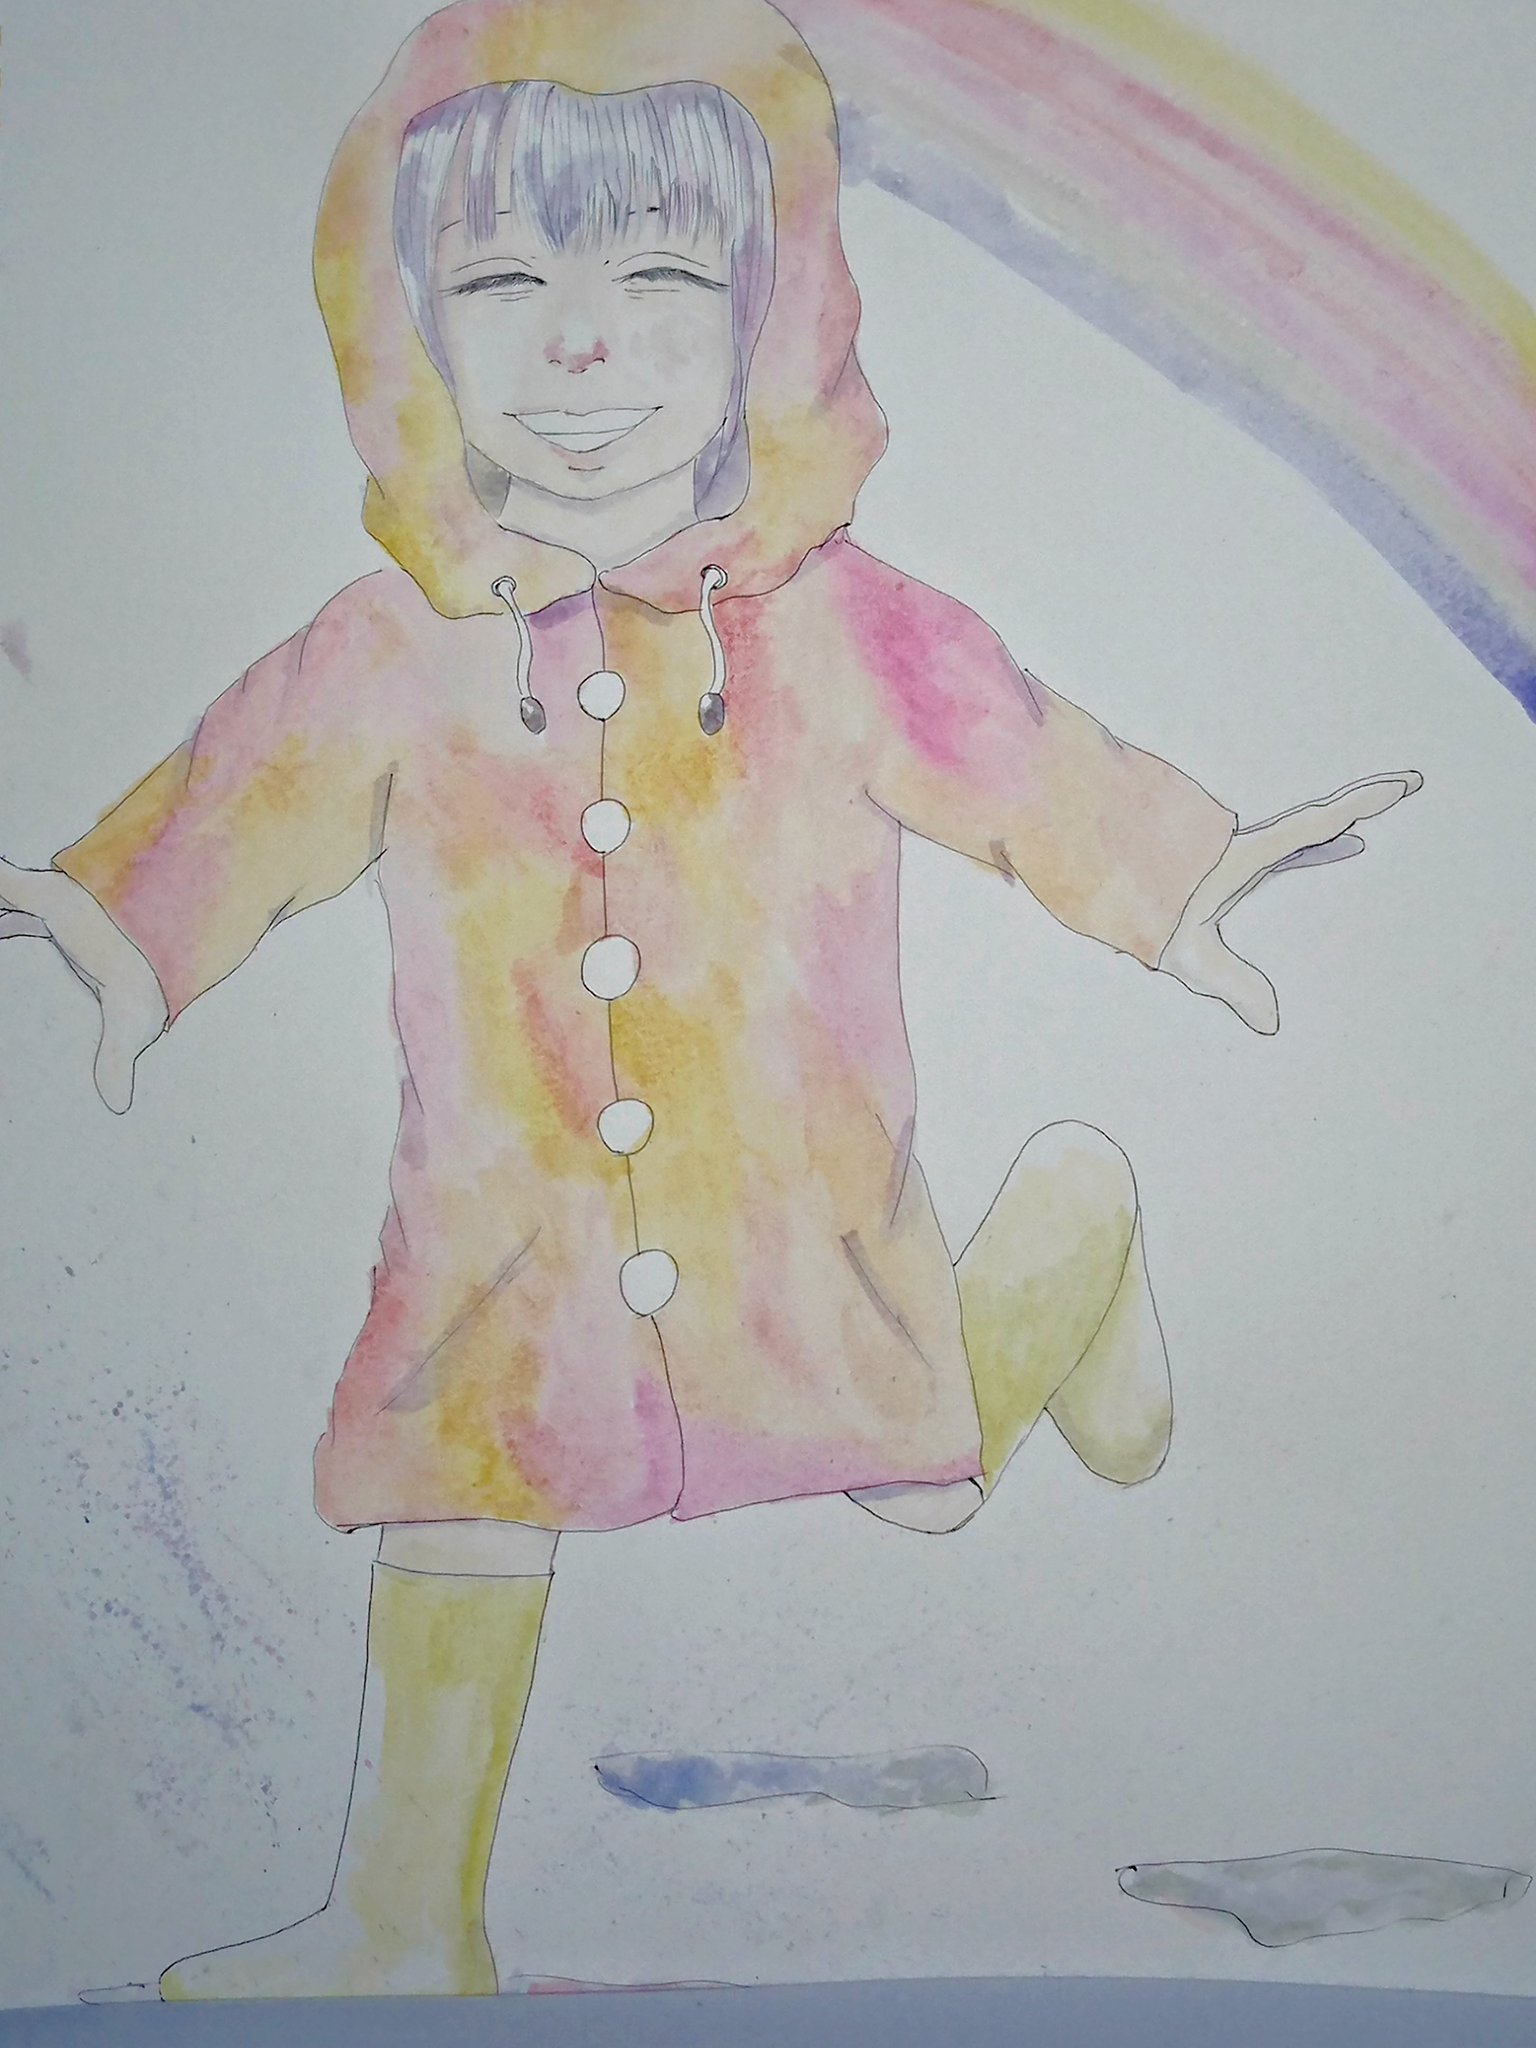 Yui Watercolor 雨上がり 水彩画 イラスト 女の子 レインコート T Co Kejkcj8qhx Twitter